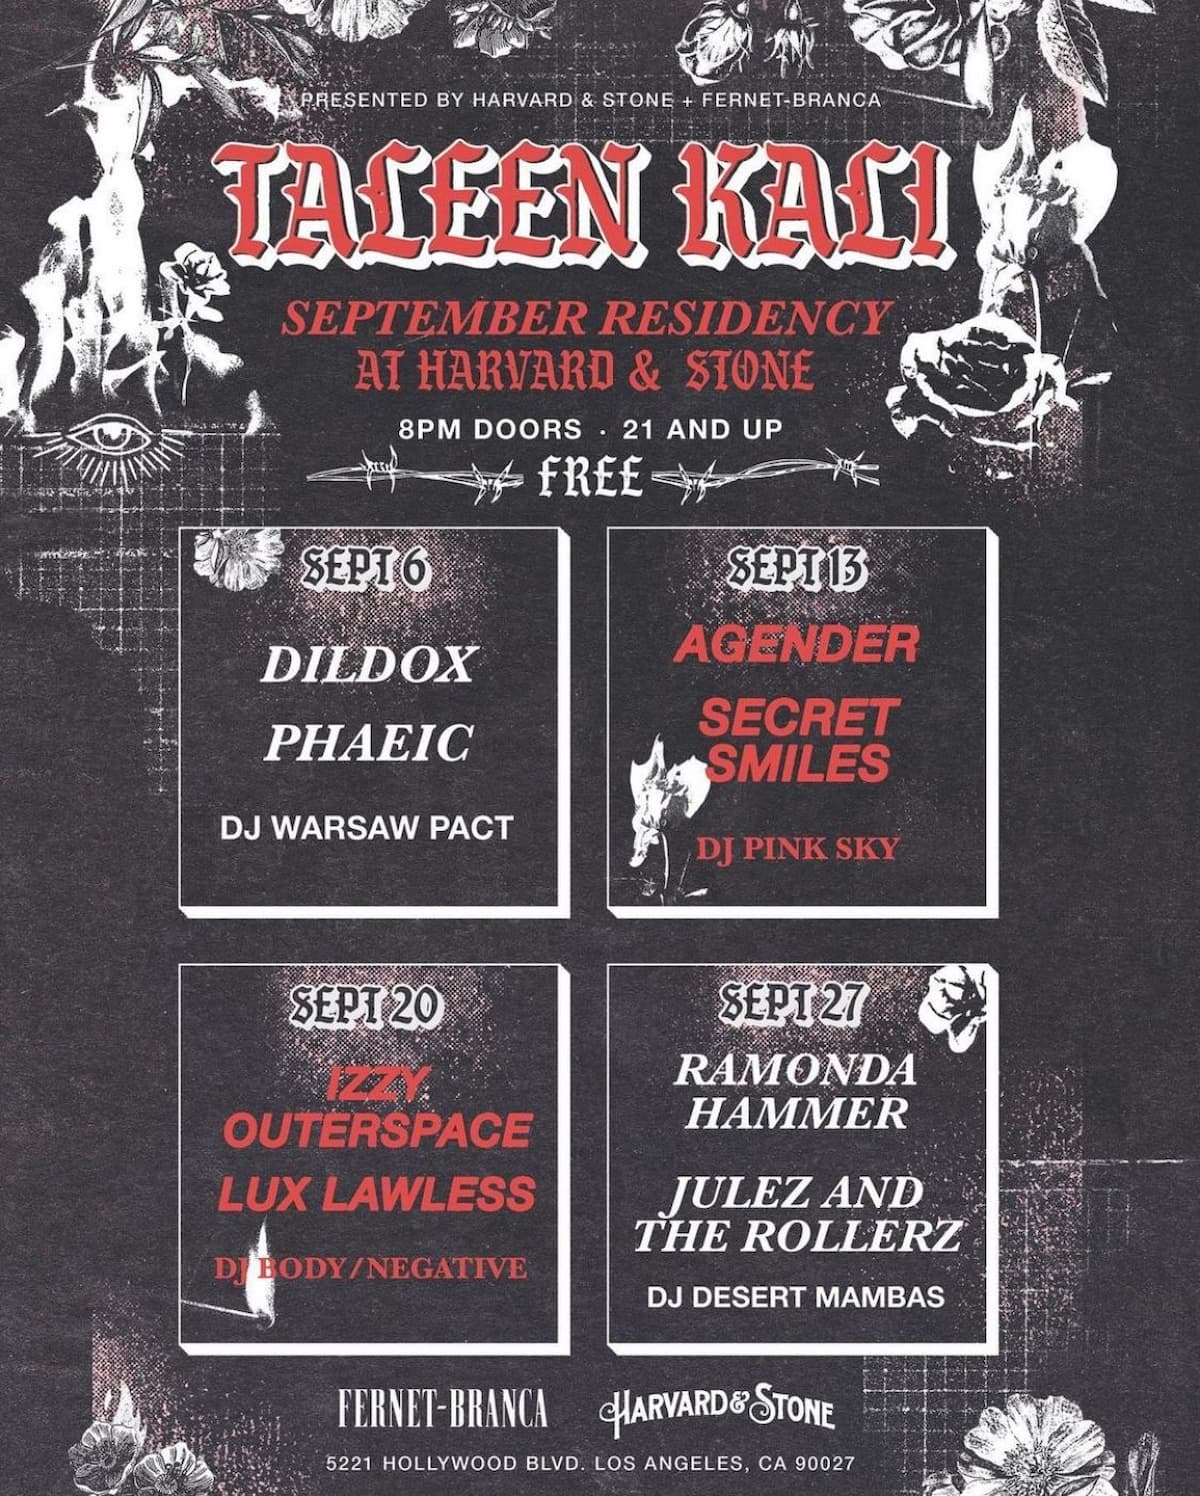 Taleen Kali / Ramonda Hammer / Julez & the Rollers / DJ Desert Mambas